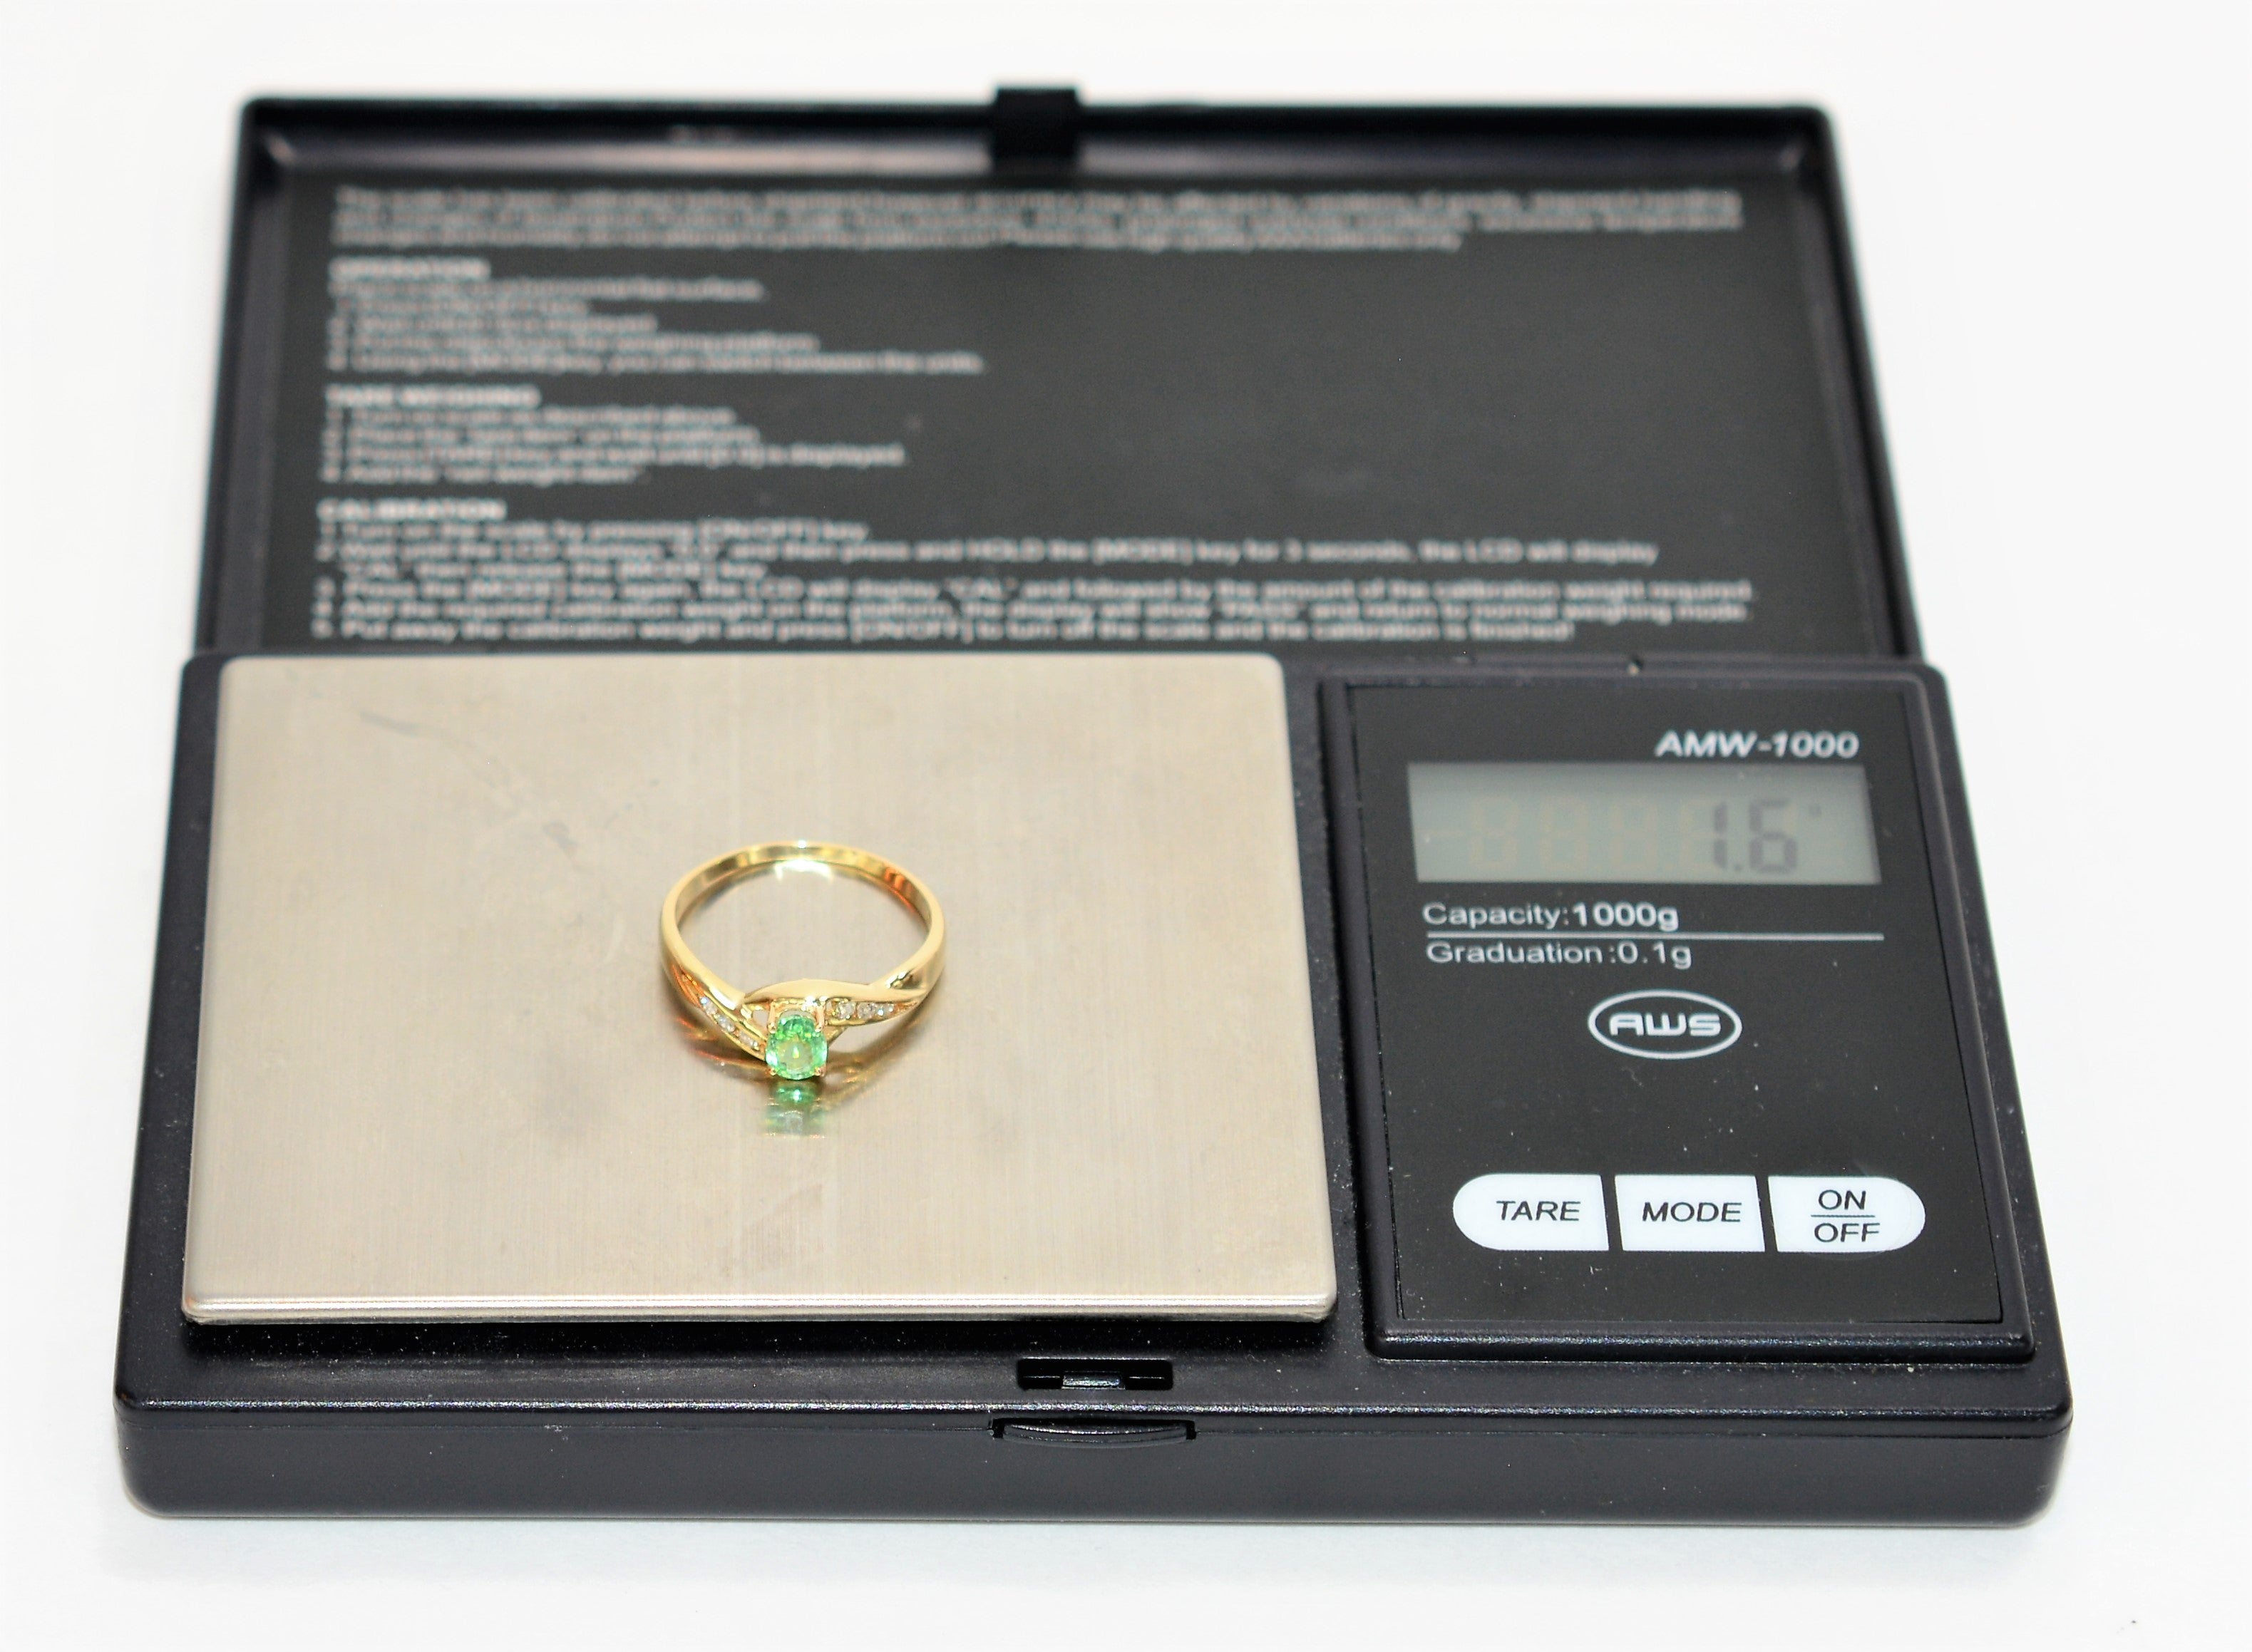 Natural Paraiba Tourmaline & Diamond Ring 10K Solid Gold .46tcw Fine Gemstone Jewelry Estate Ring Women's Ring Birthstone Jewellery